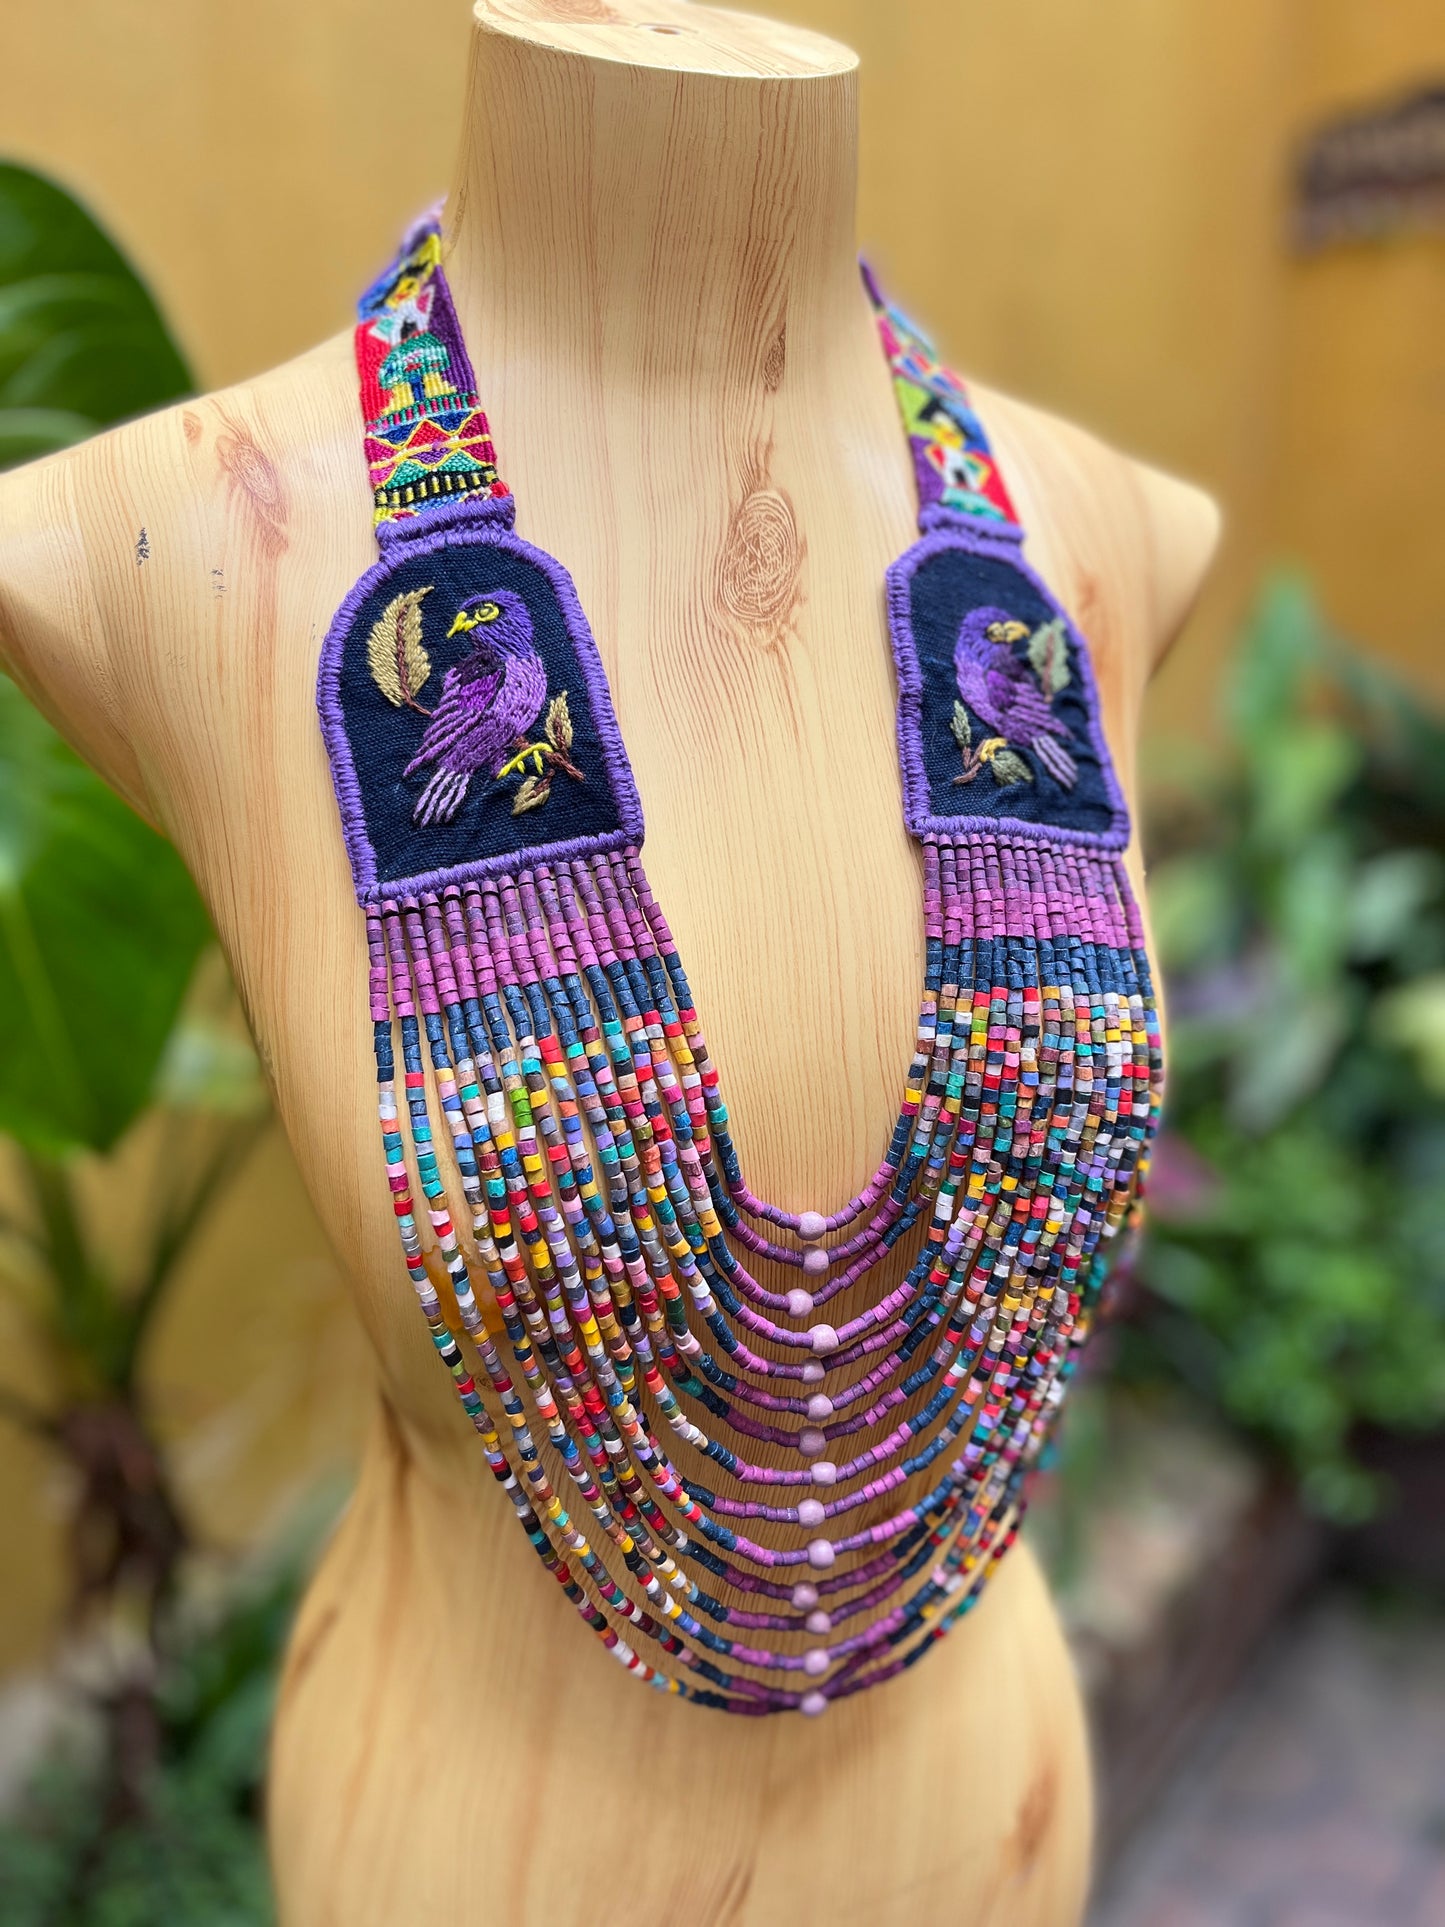 Hand-embroidered Birds Necklaces - "Santiago x Zunil"